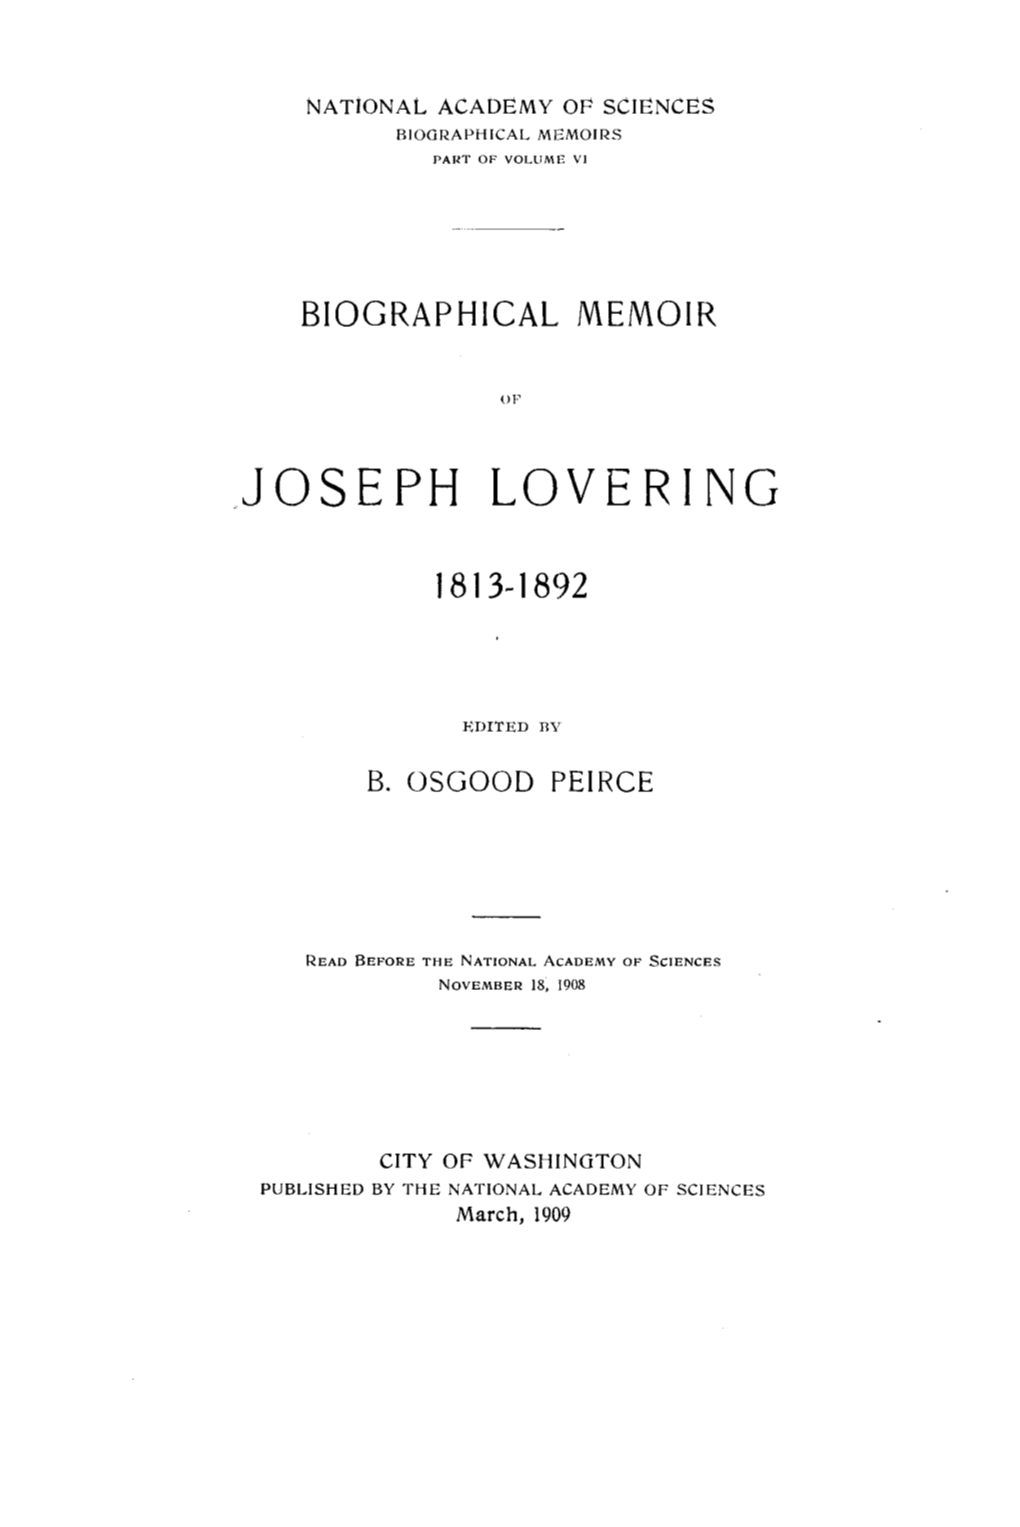 Joseph Lovering